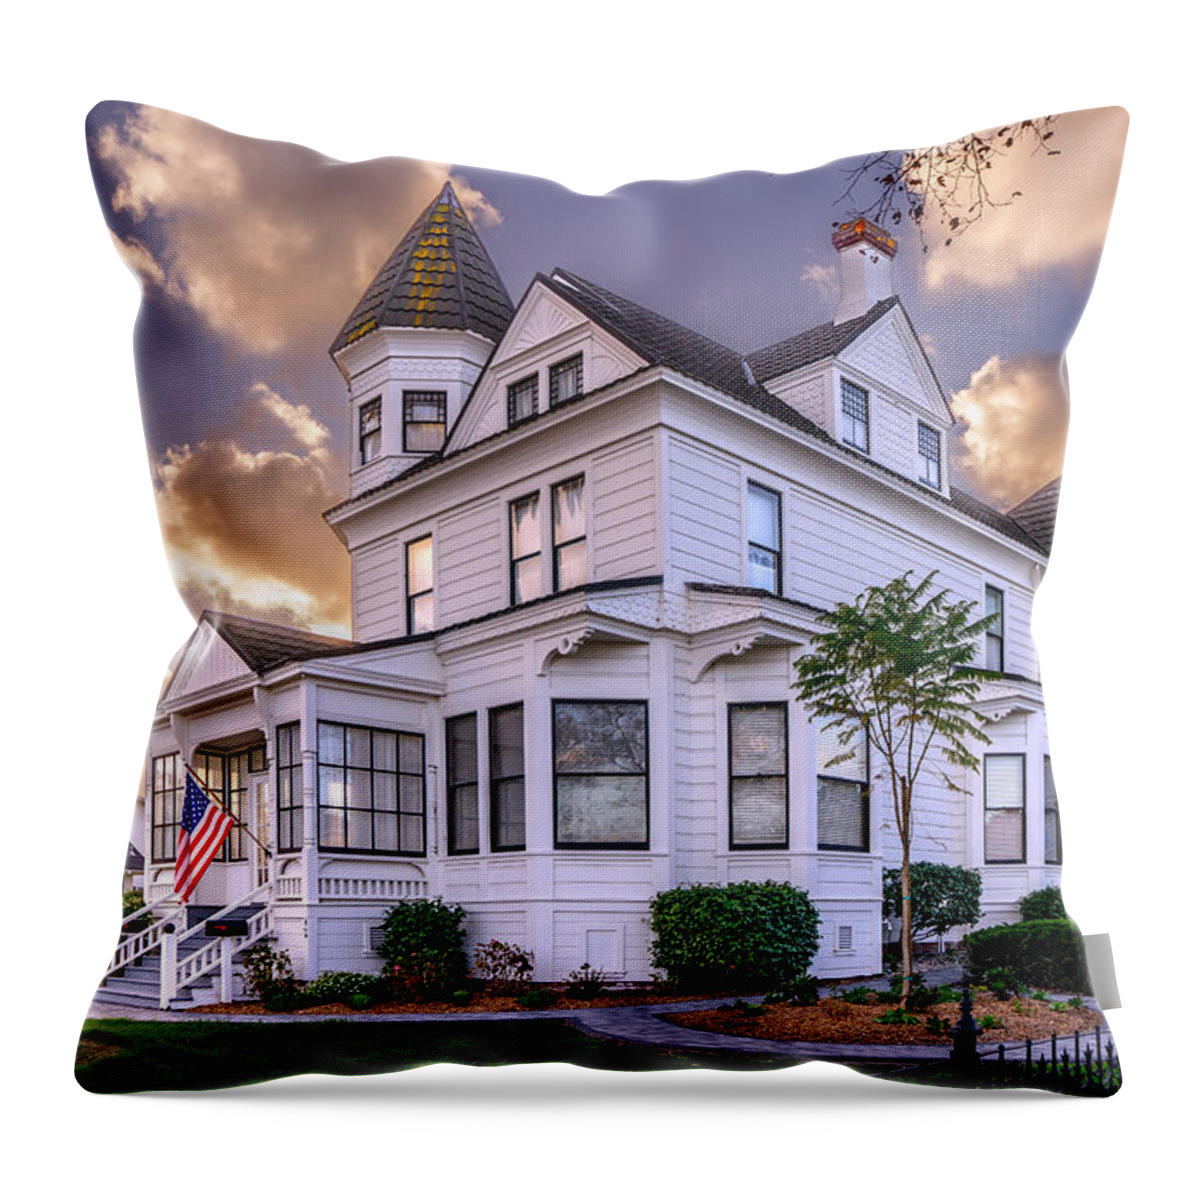 Monterey Throw Pillow featuring the photograph Historic Monterey Home by Derek Dean